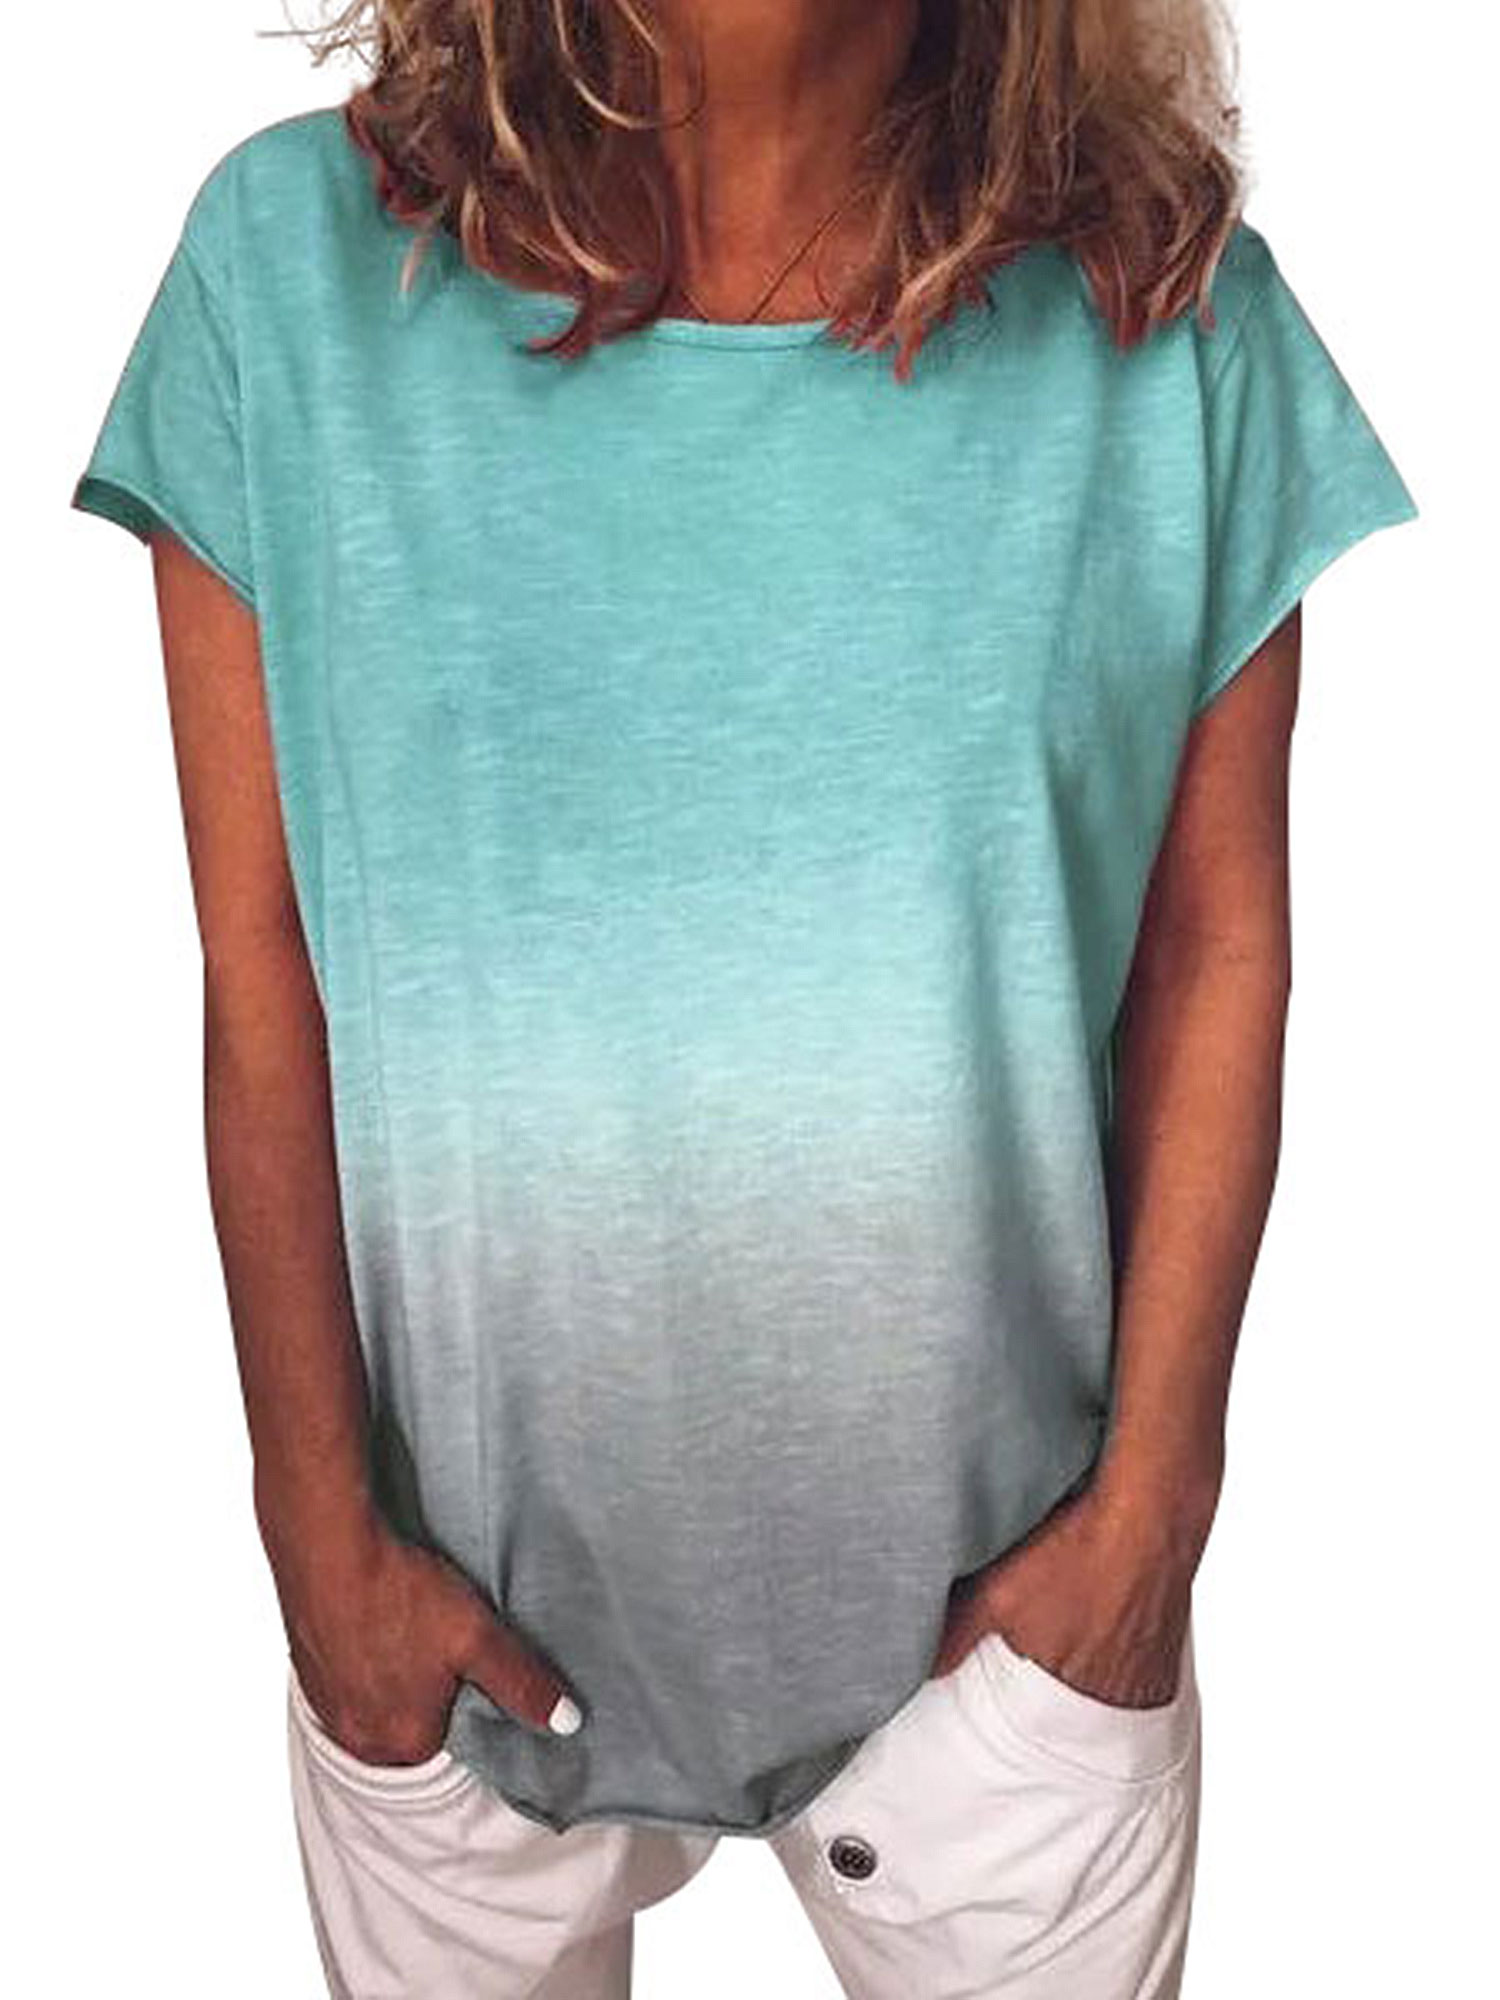 Meikosks Womens Summer Oversized Tops Tie-Dye Short Sleeve Crew Neck T-Shirt with Pocket Blouses 